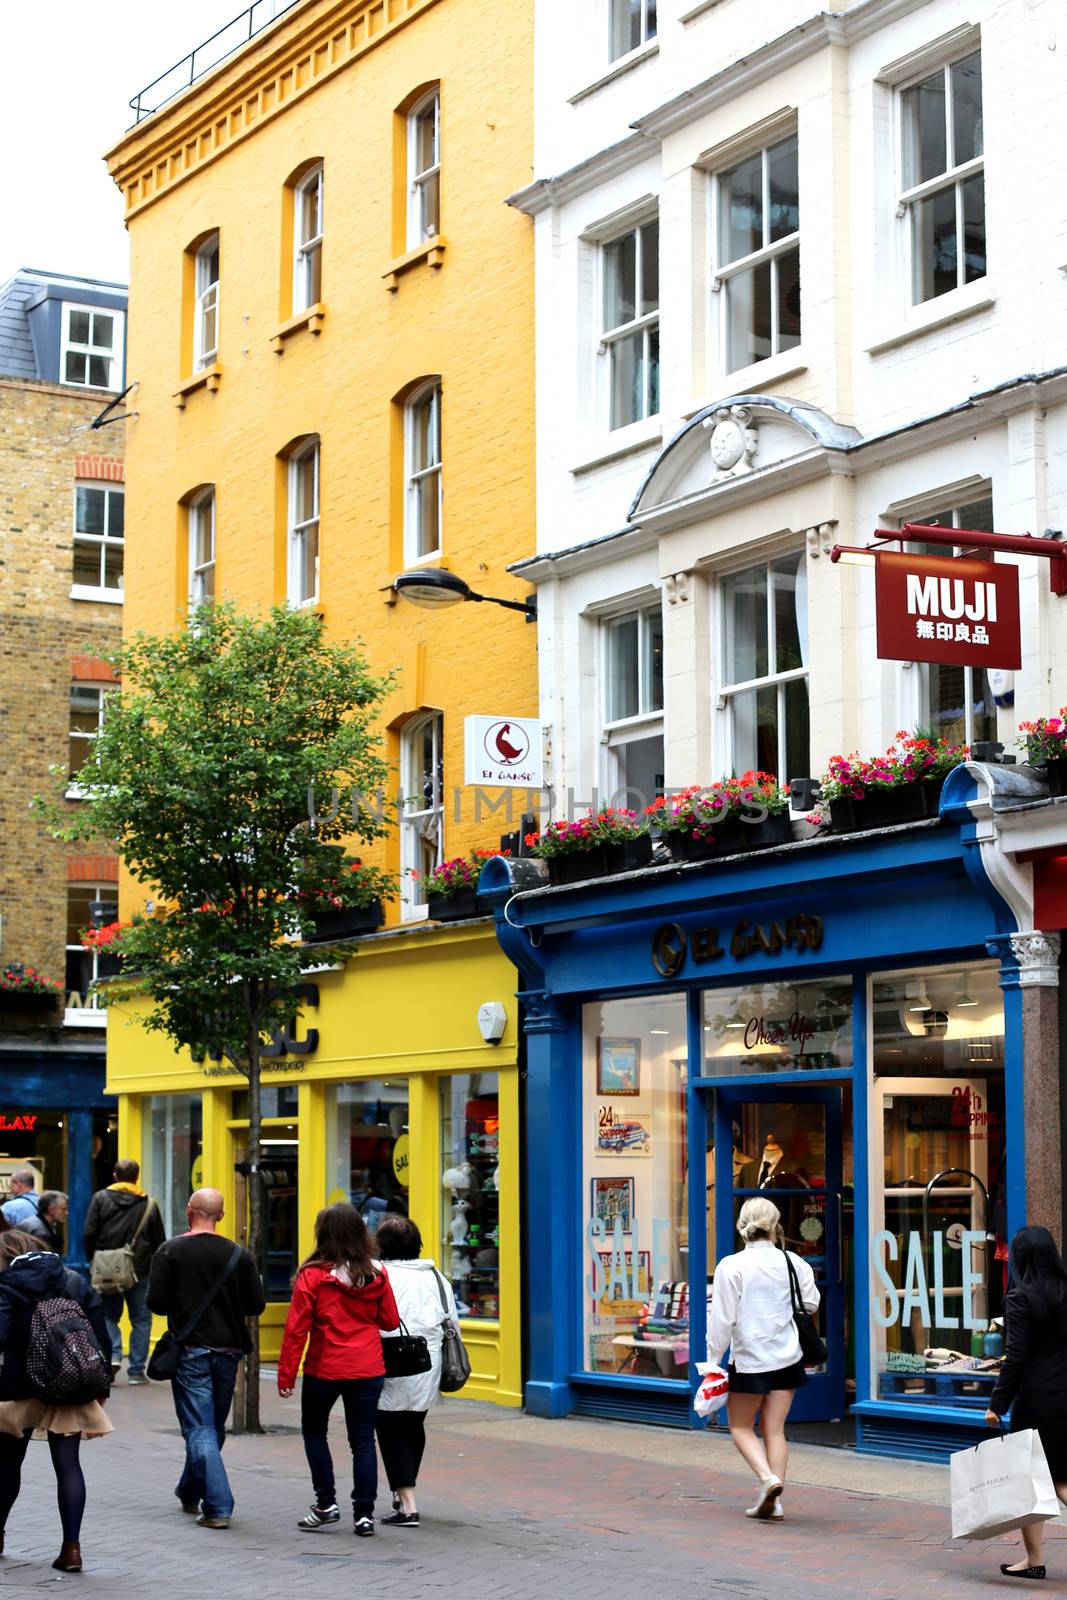 Shoppers Carnaby Street London by Whiteboxmedia